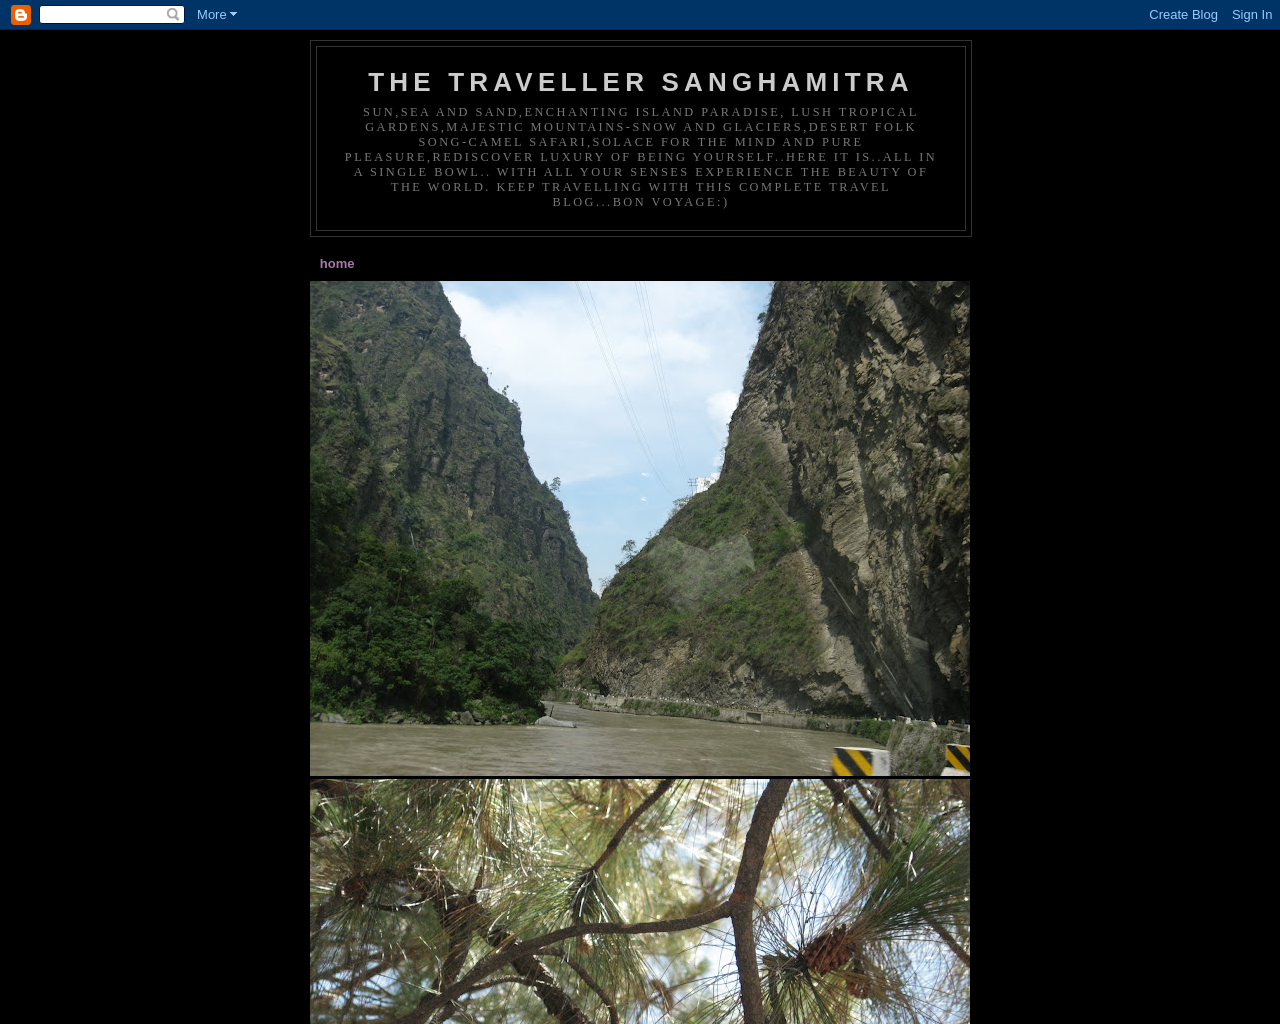 The Traveller Sanghamitra